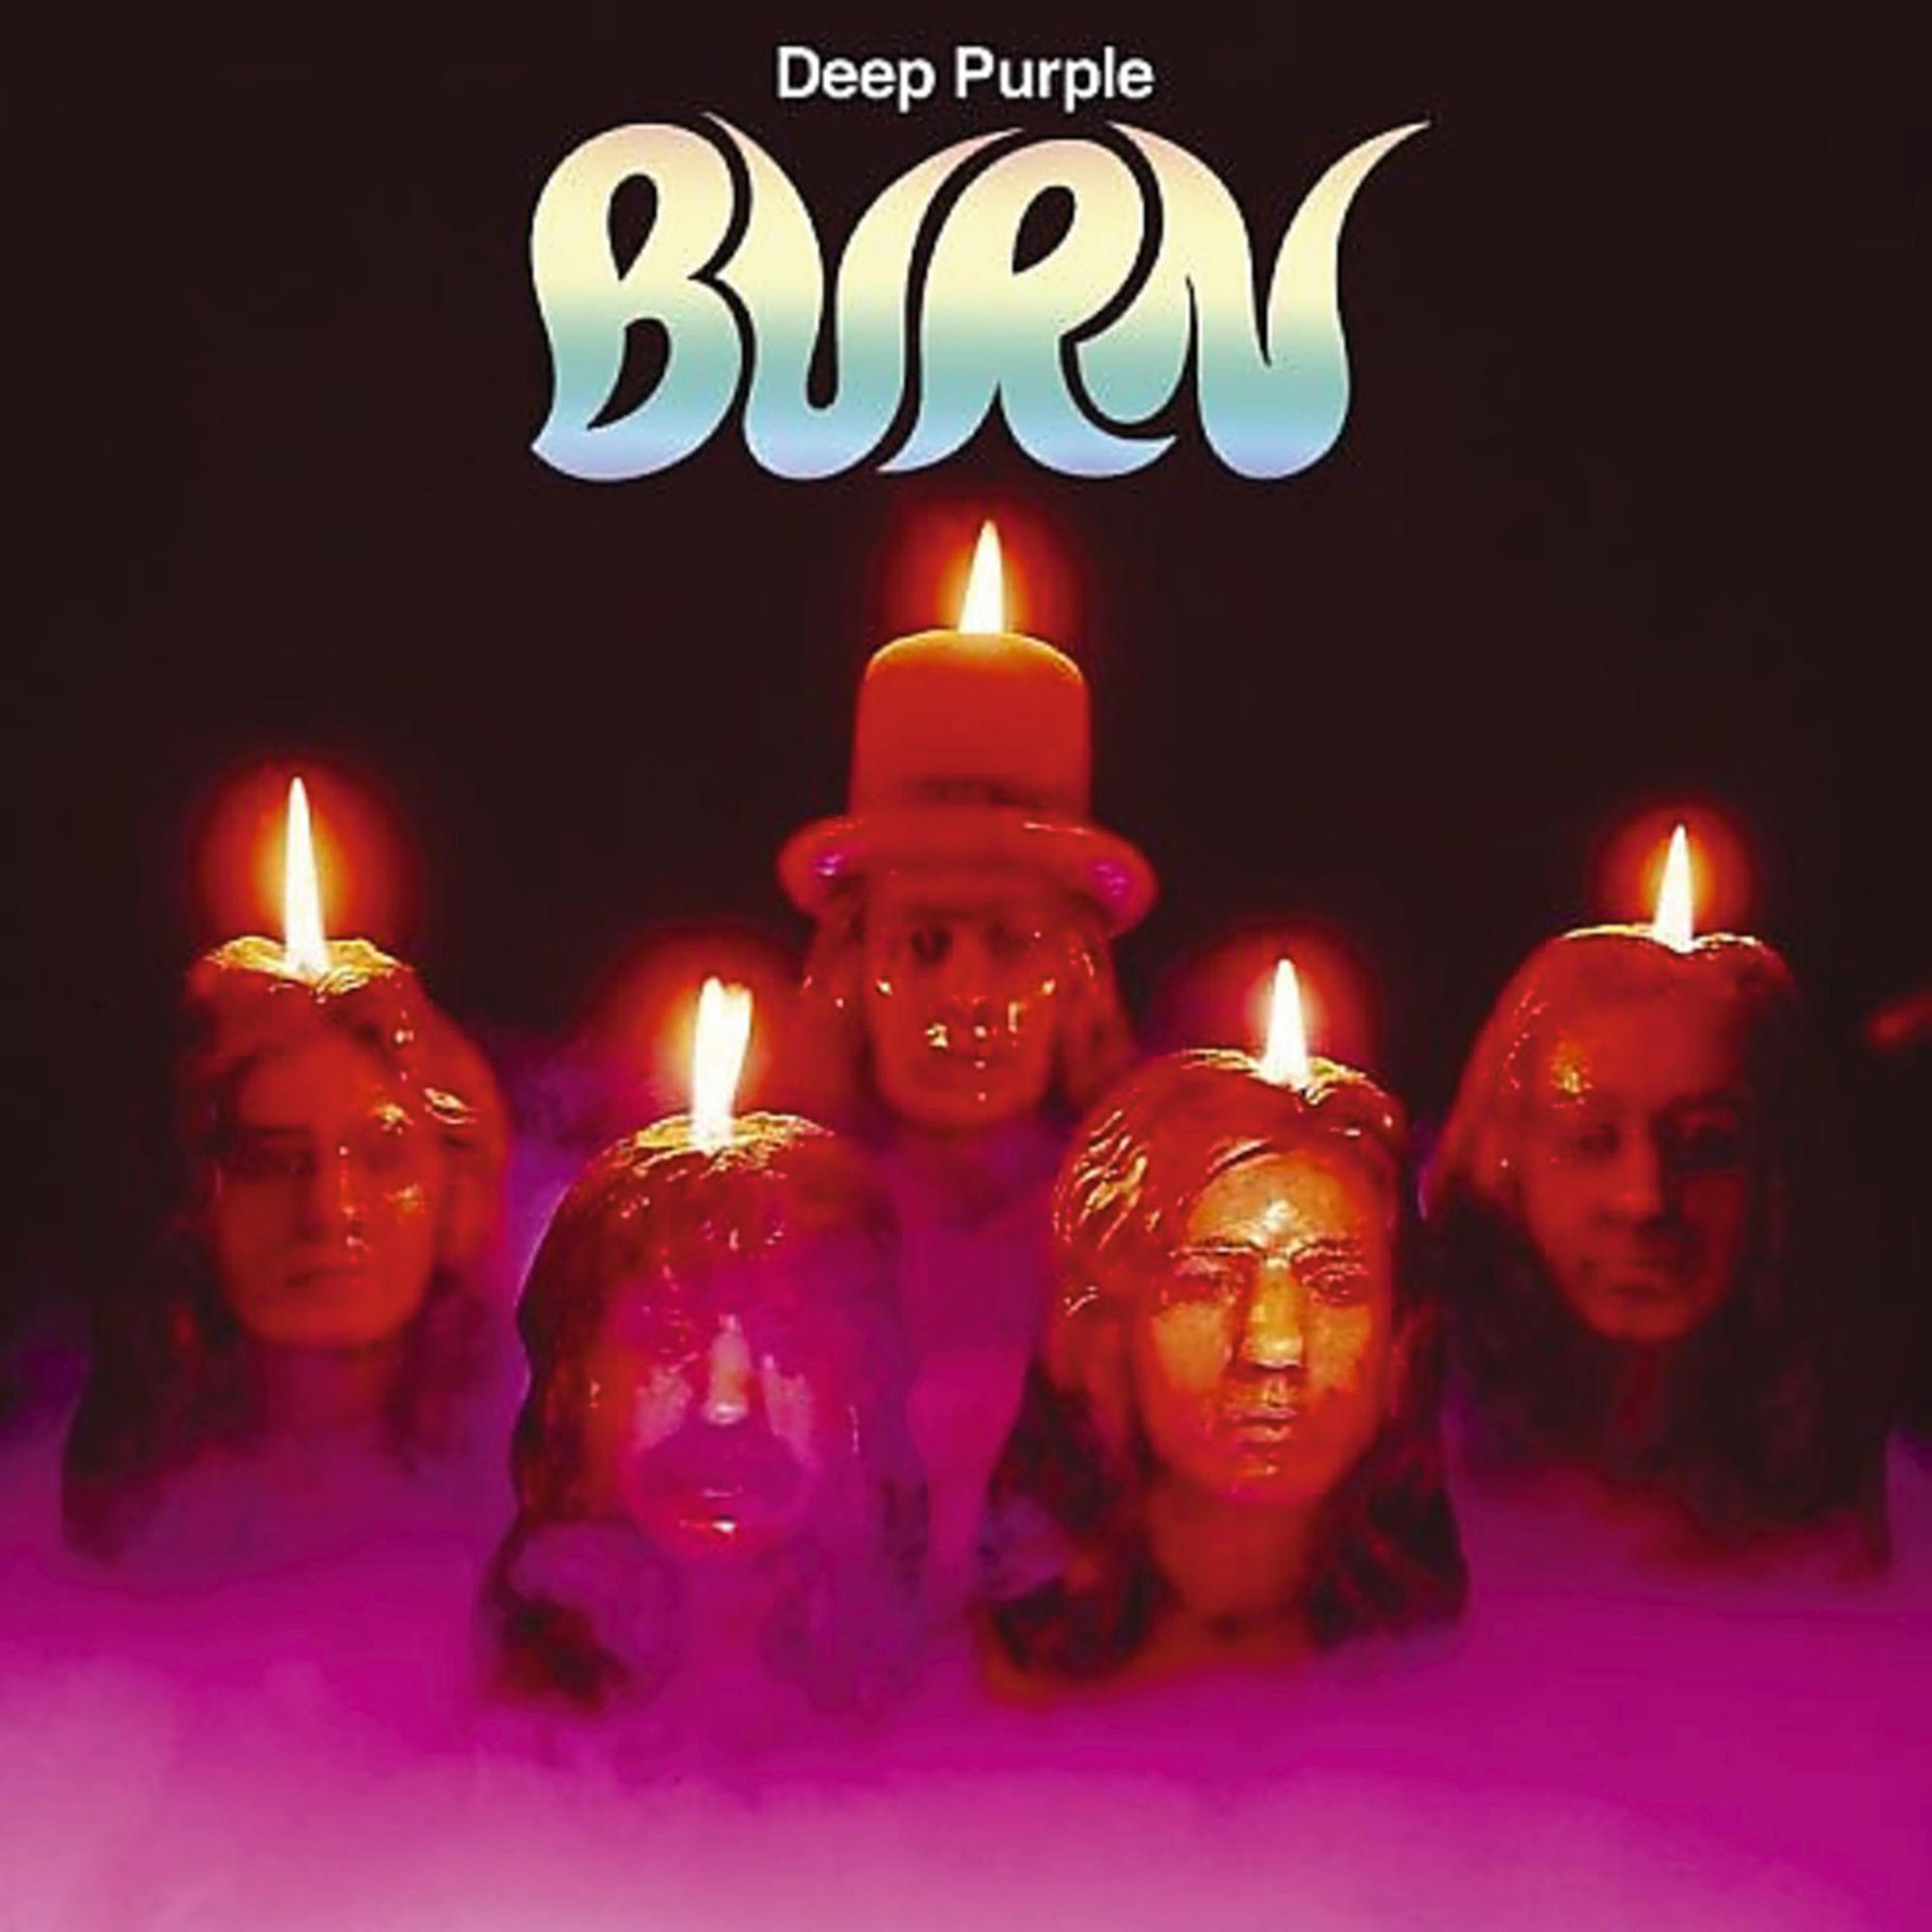 Deep Purple - (Vinyl) - Burn (180g Lp)